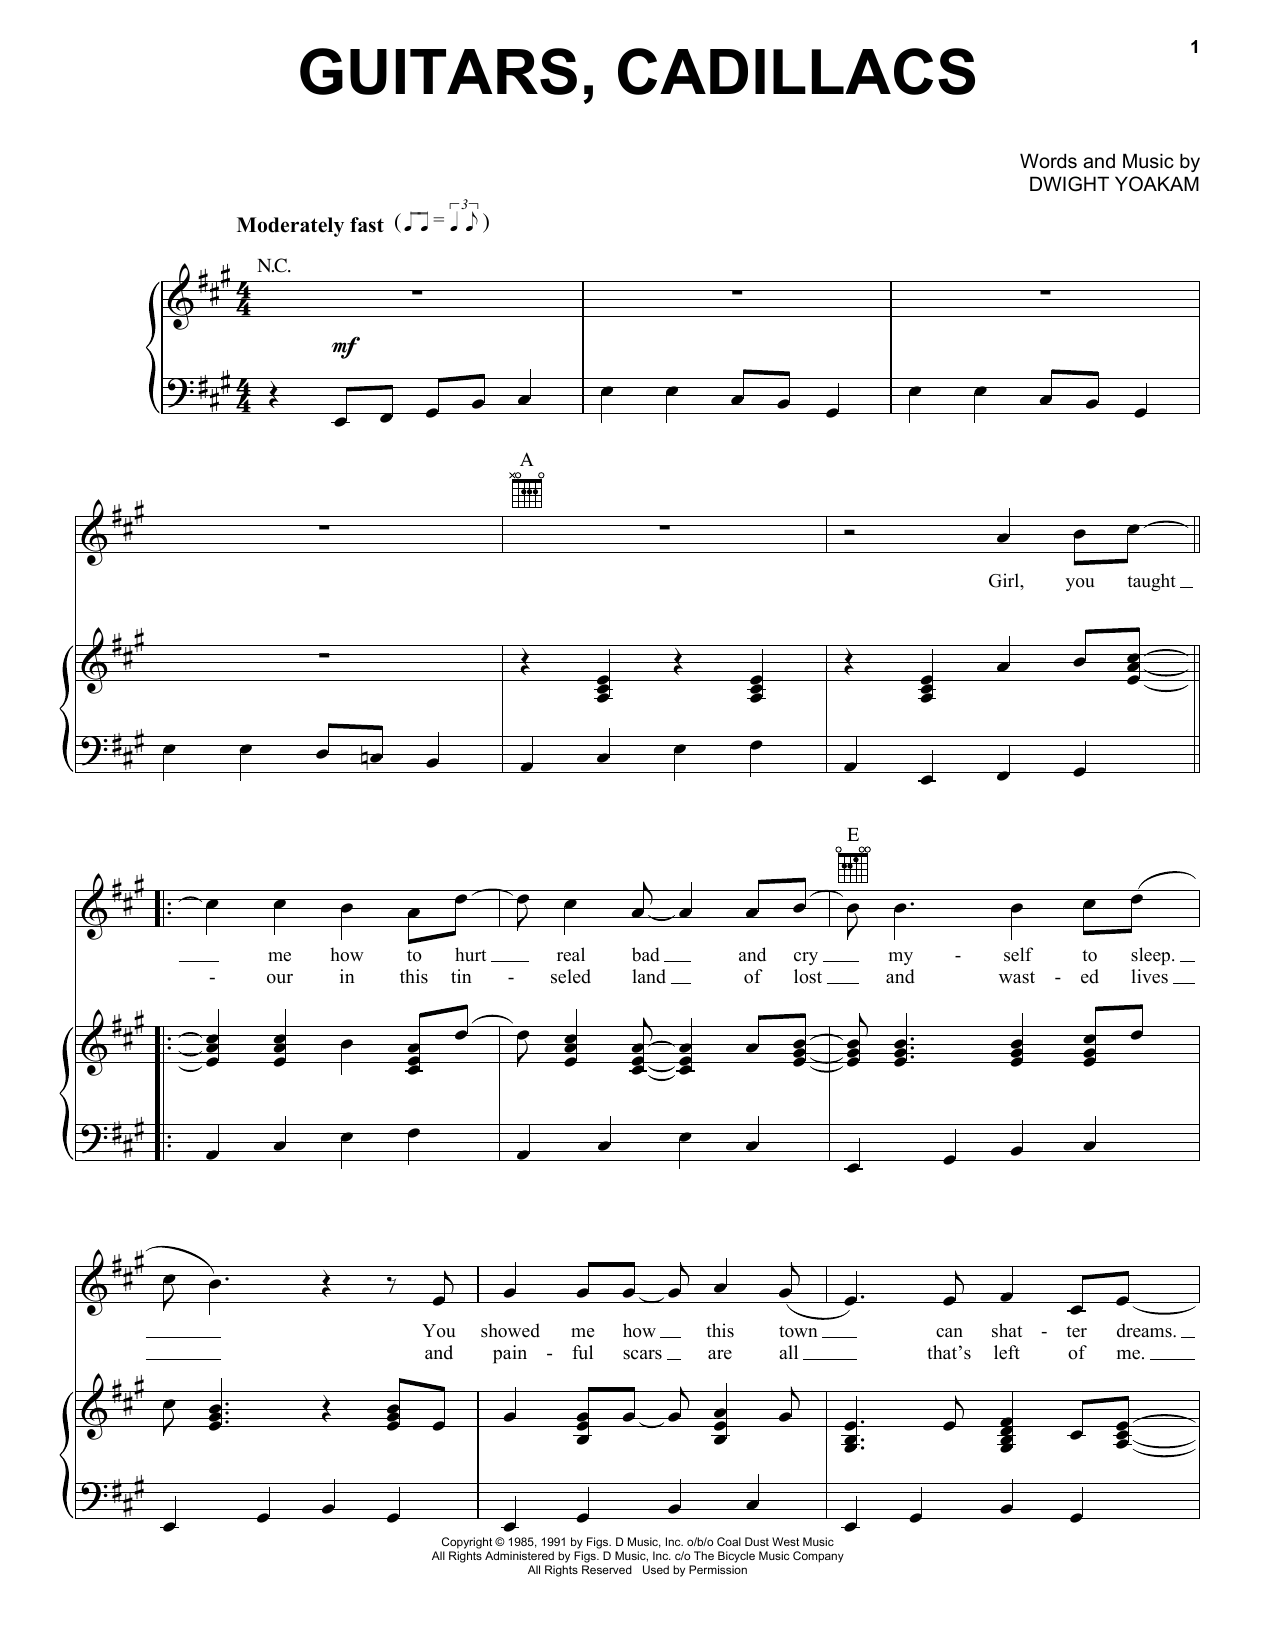 Dwight Yoakam Guitars, Cadillacs Sheet Music Notes & Chords for Easy Piano - Download or Print PDF